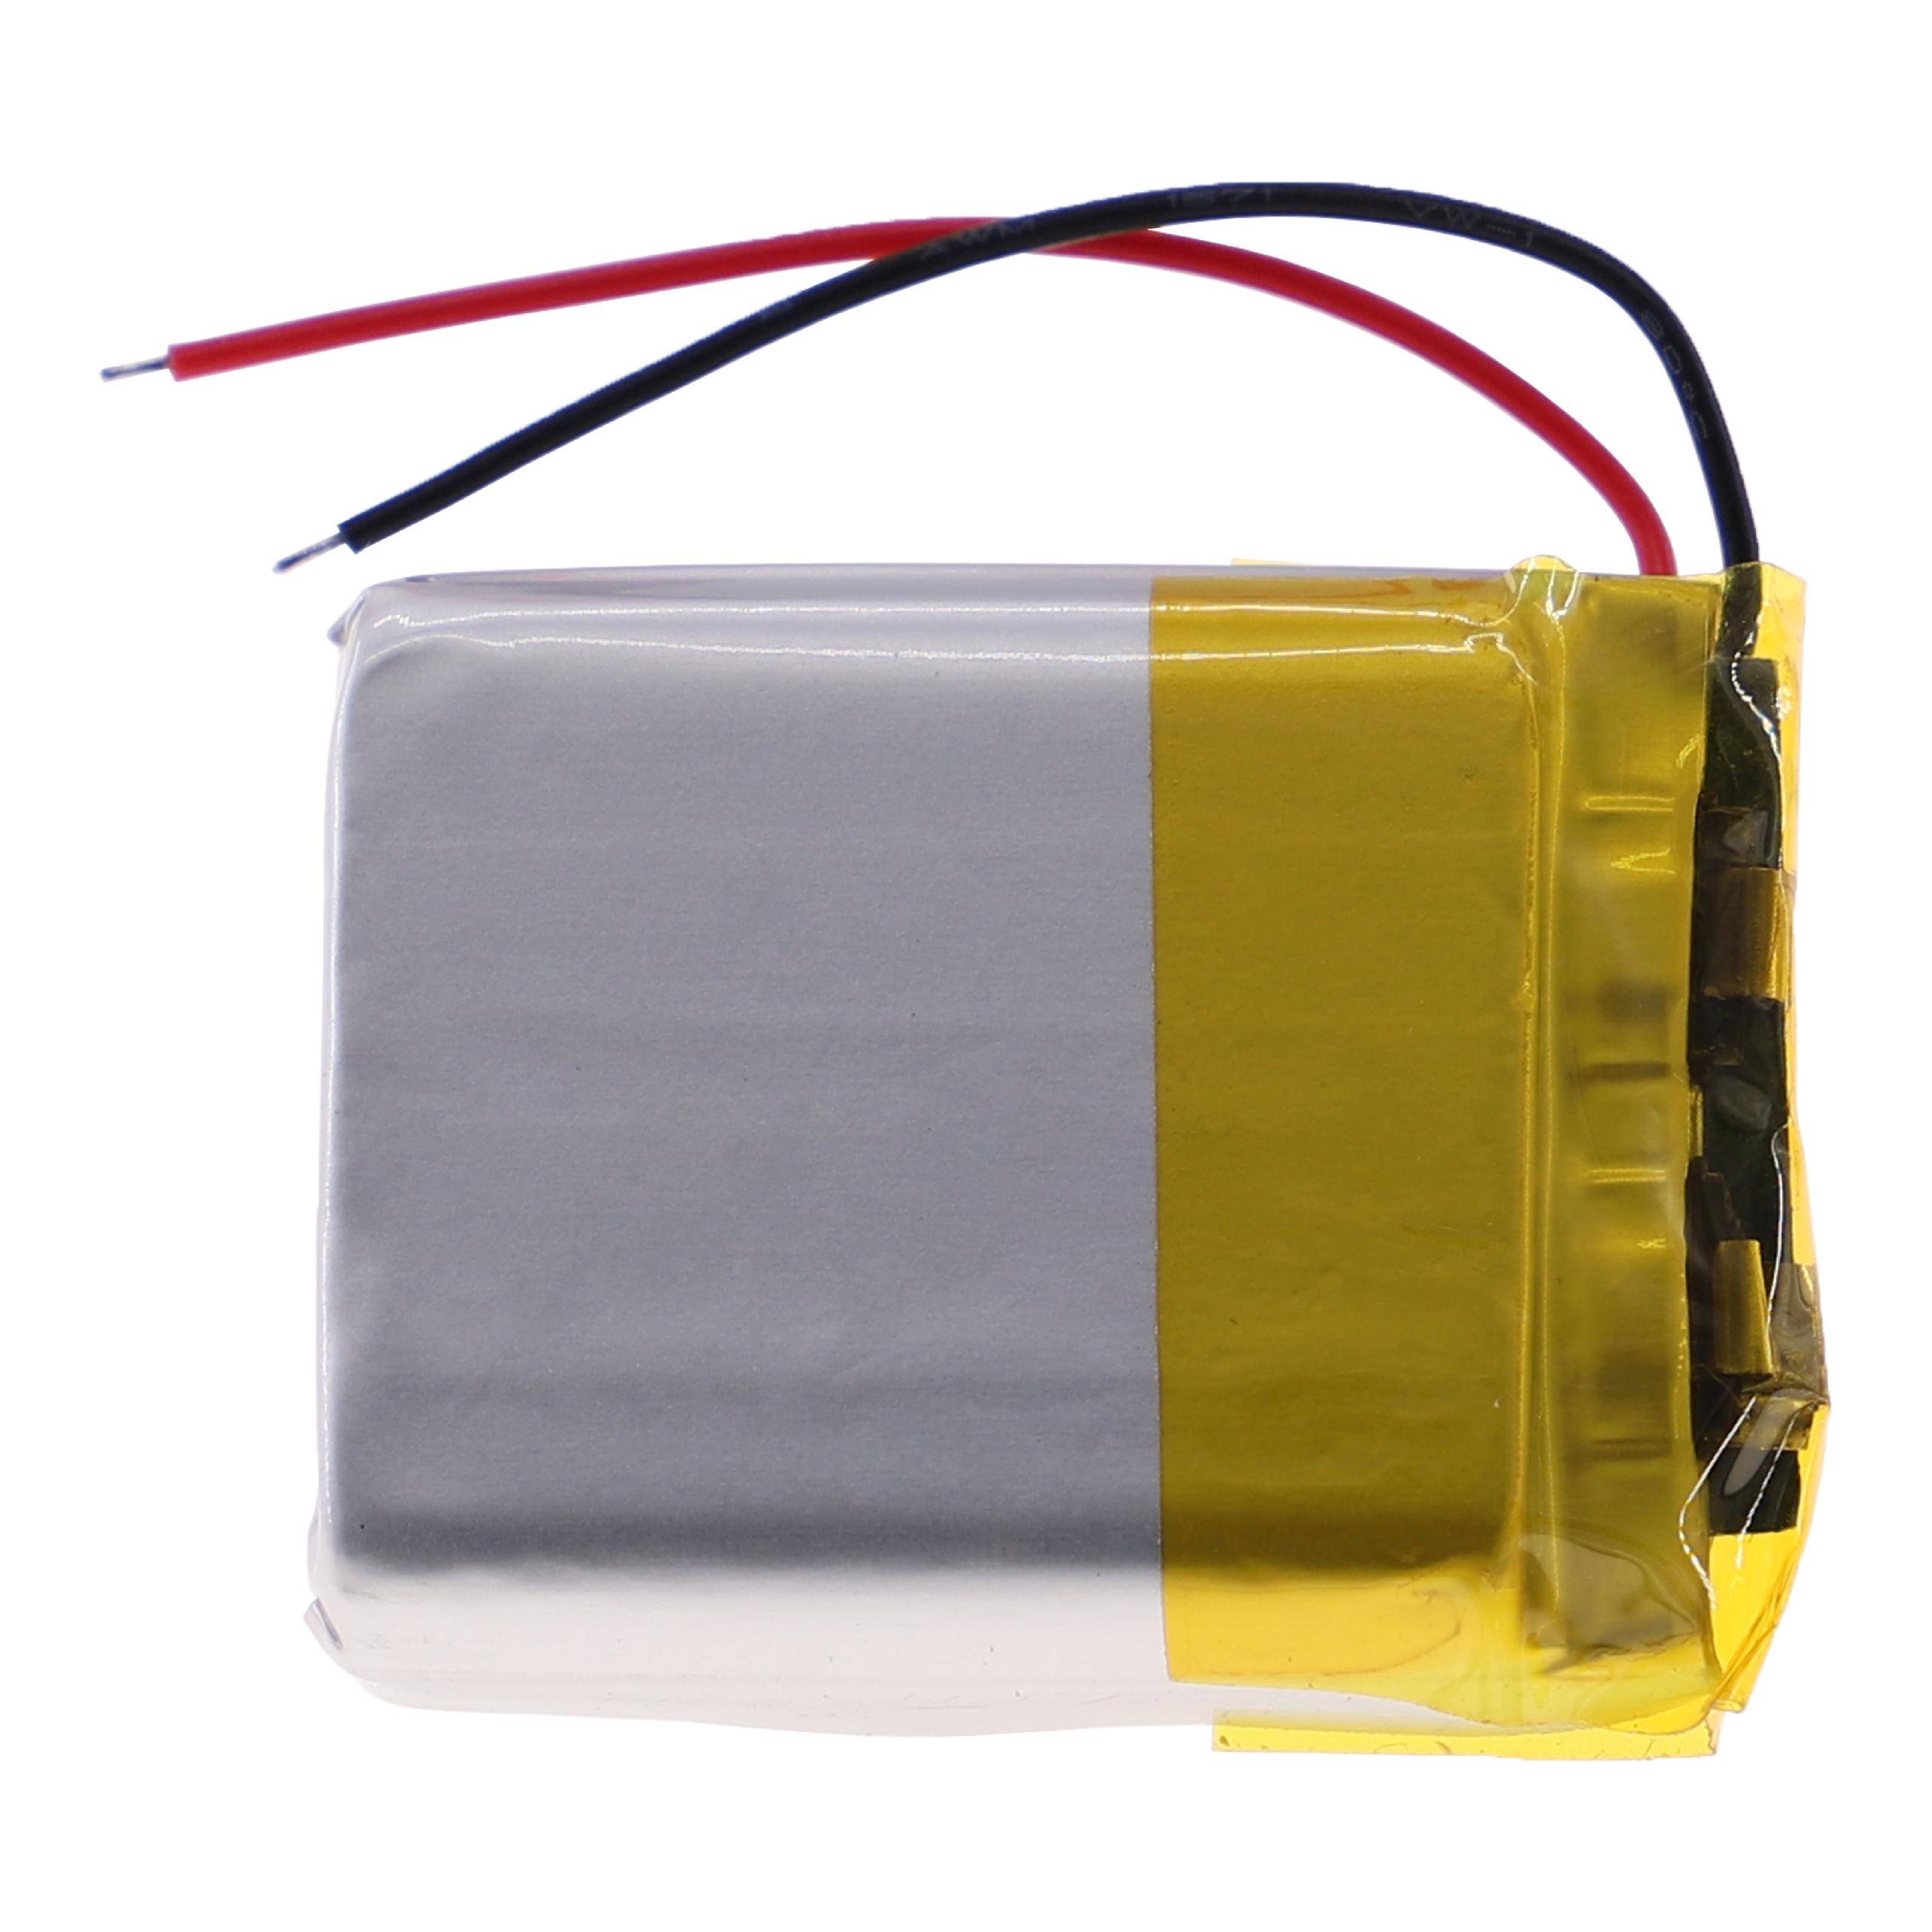 Smartwatch Battery Replacement for Golf Buddy AEE622530P6H - 550mAh 3.7V Li-polymer